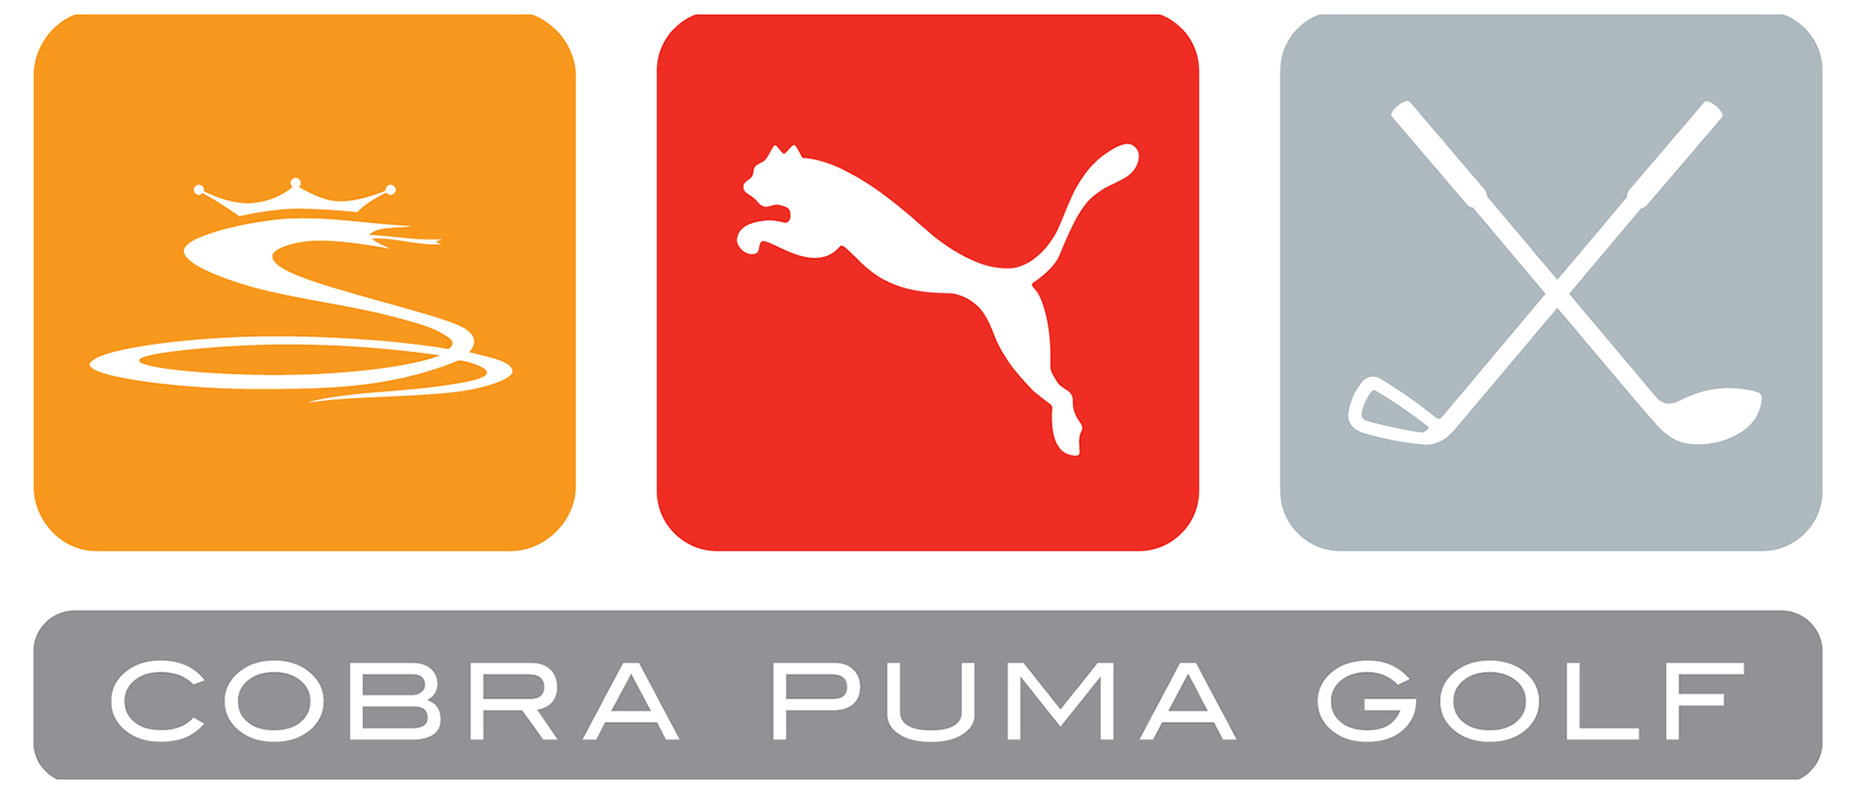 puma king cobra